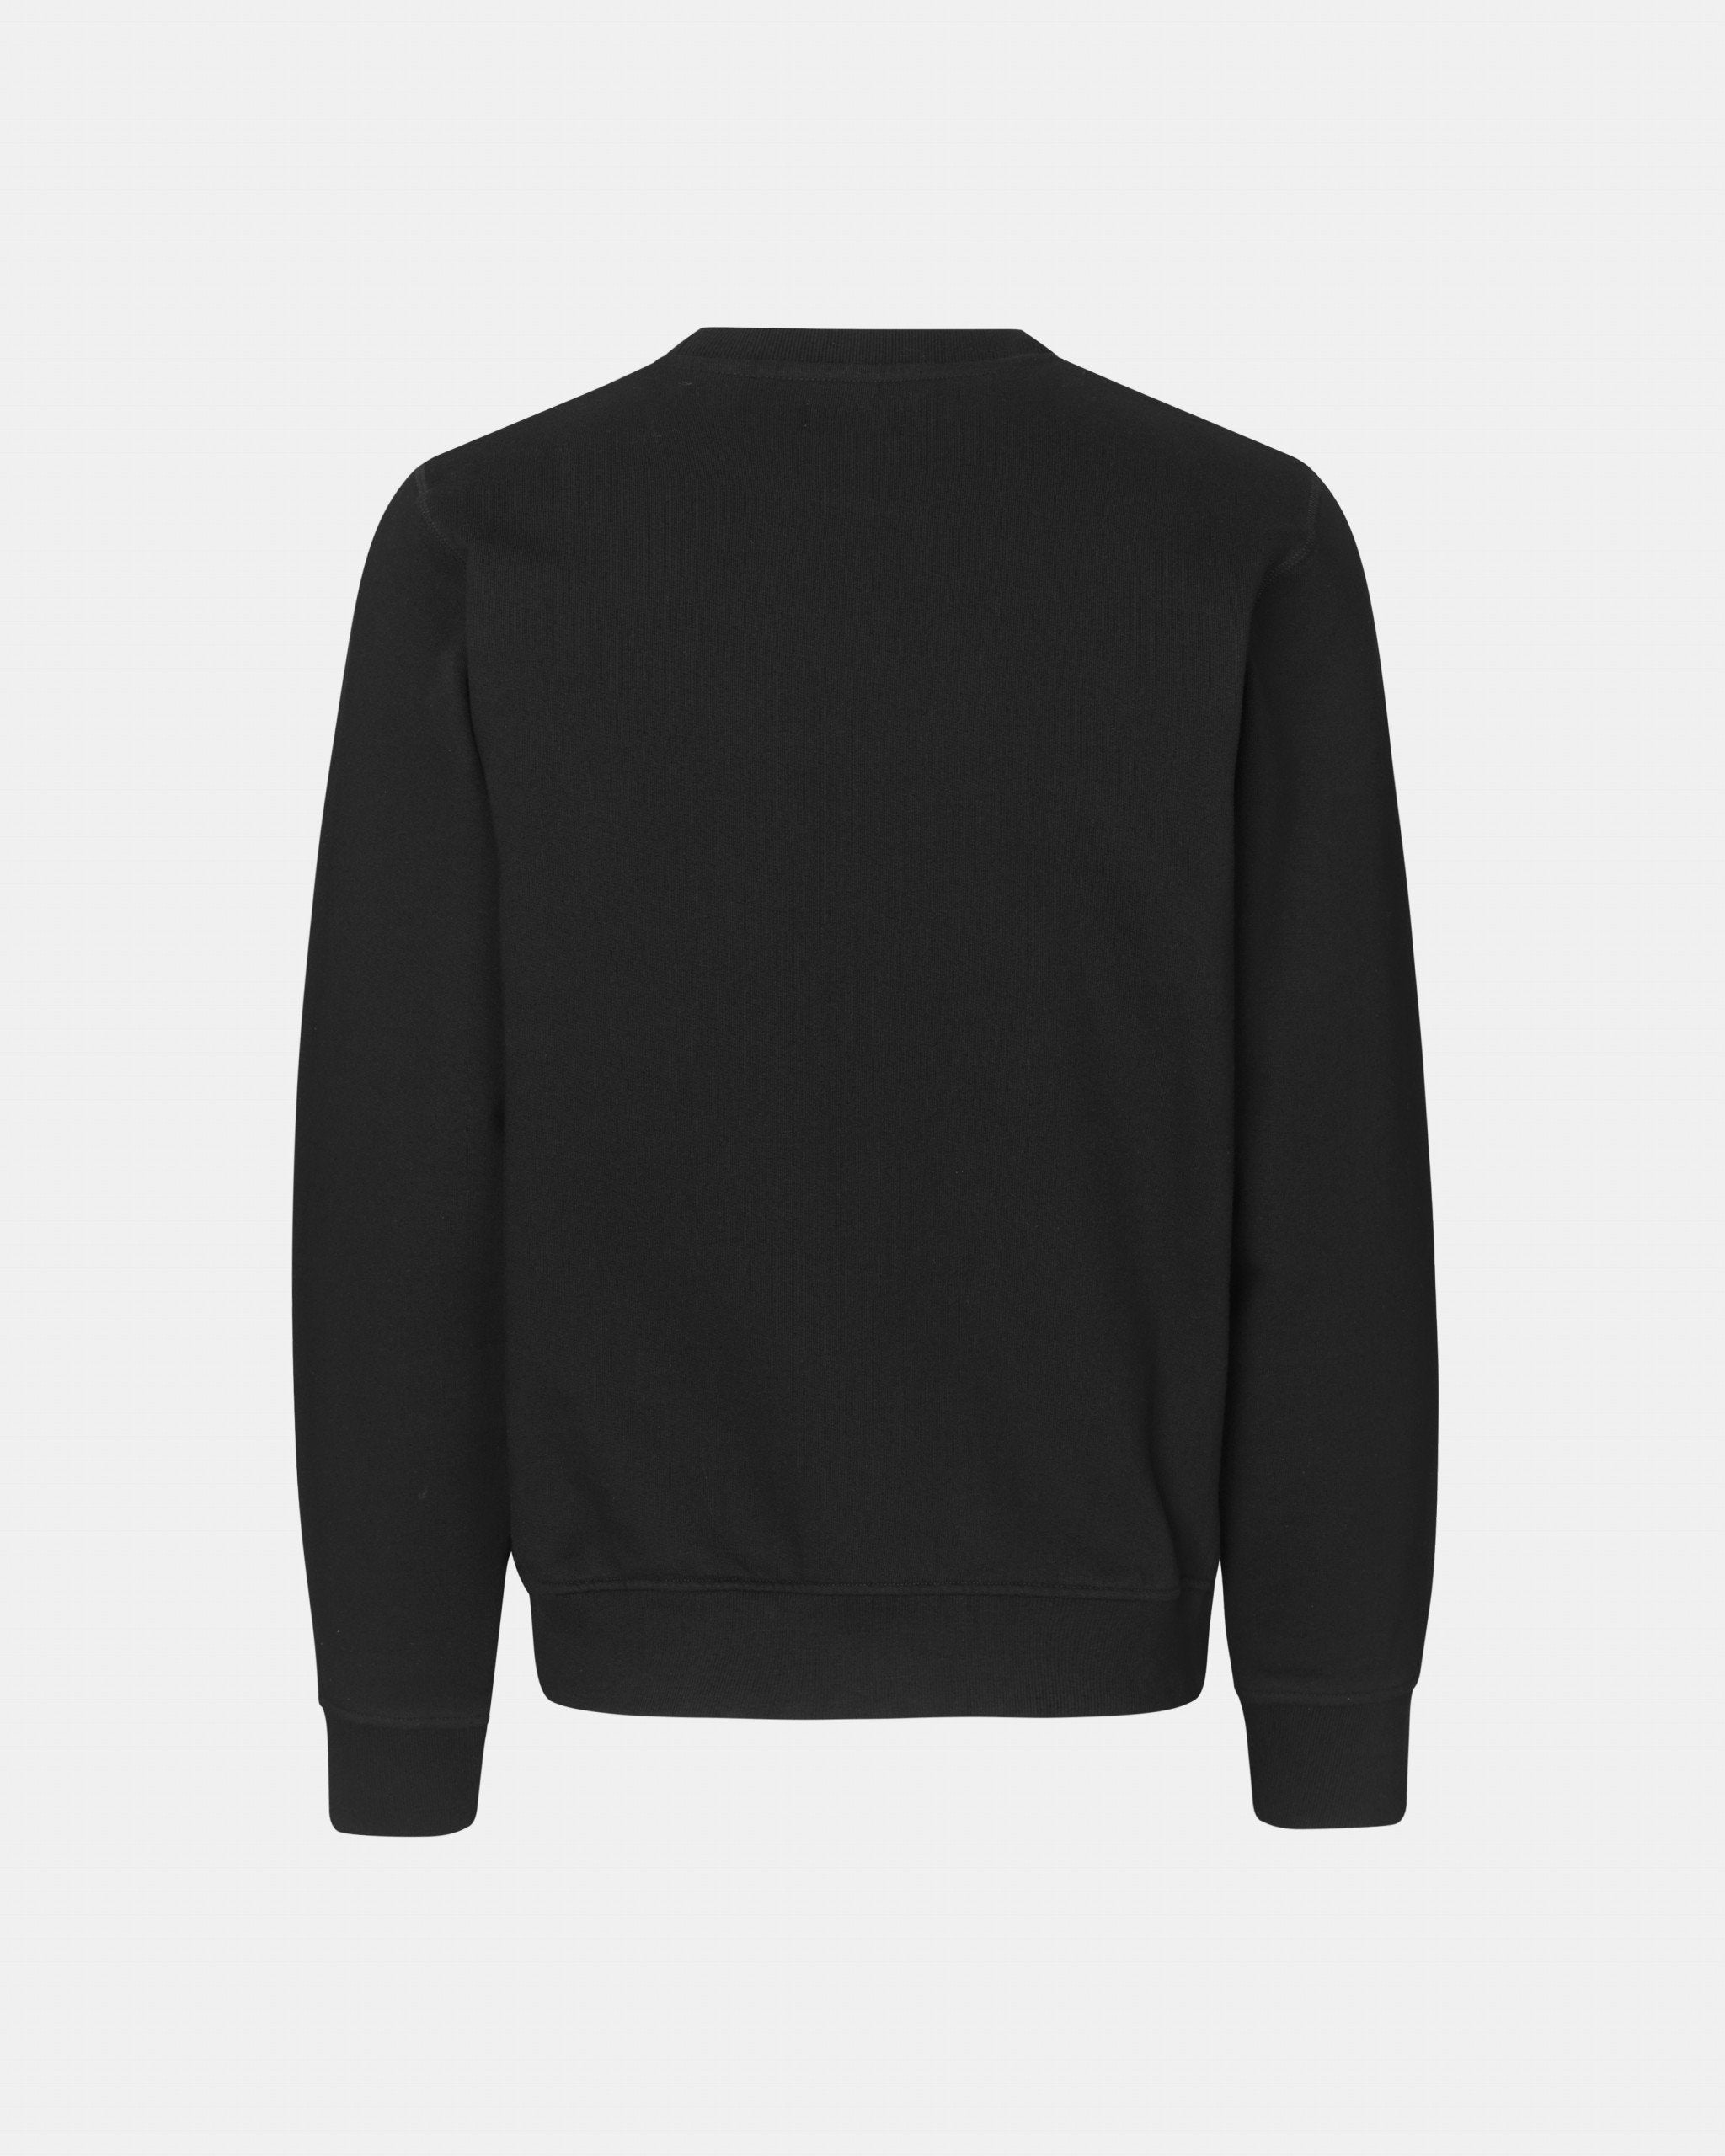 Off-Race PNS Sweatshirt - Black